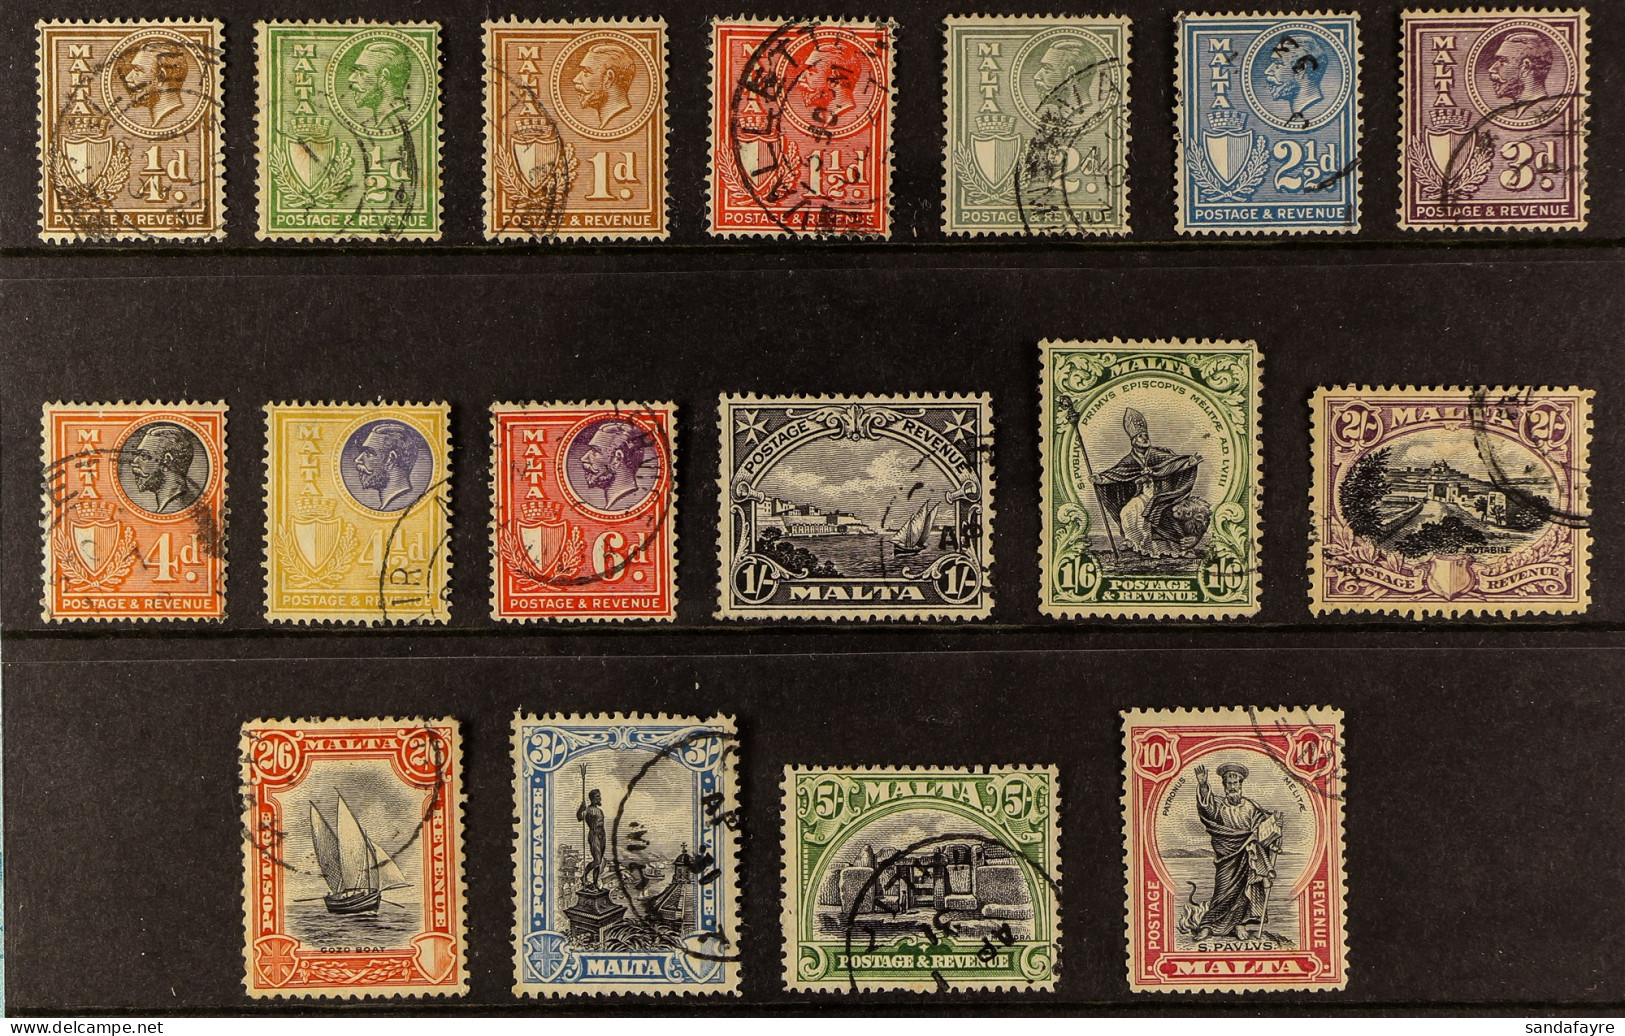 1930 'Postage & Revenue' Set, SG 193/209, Fine Used. Cat ?425 (17 Stamps) - Malta (...-1964)